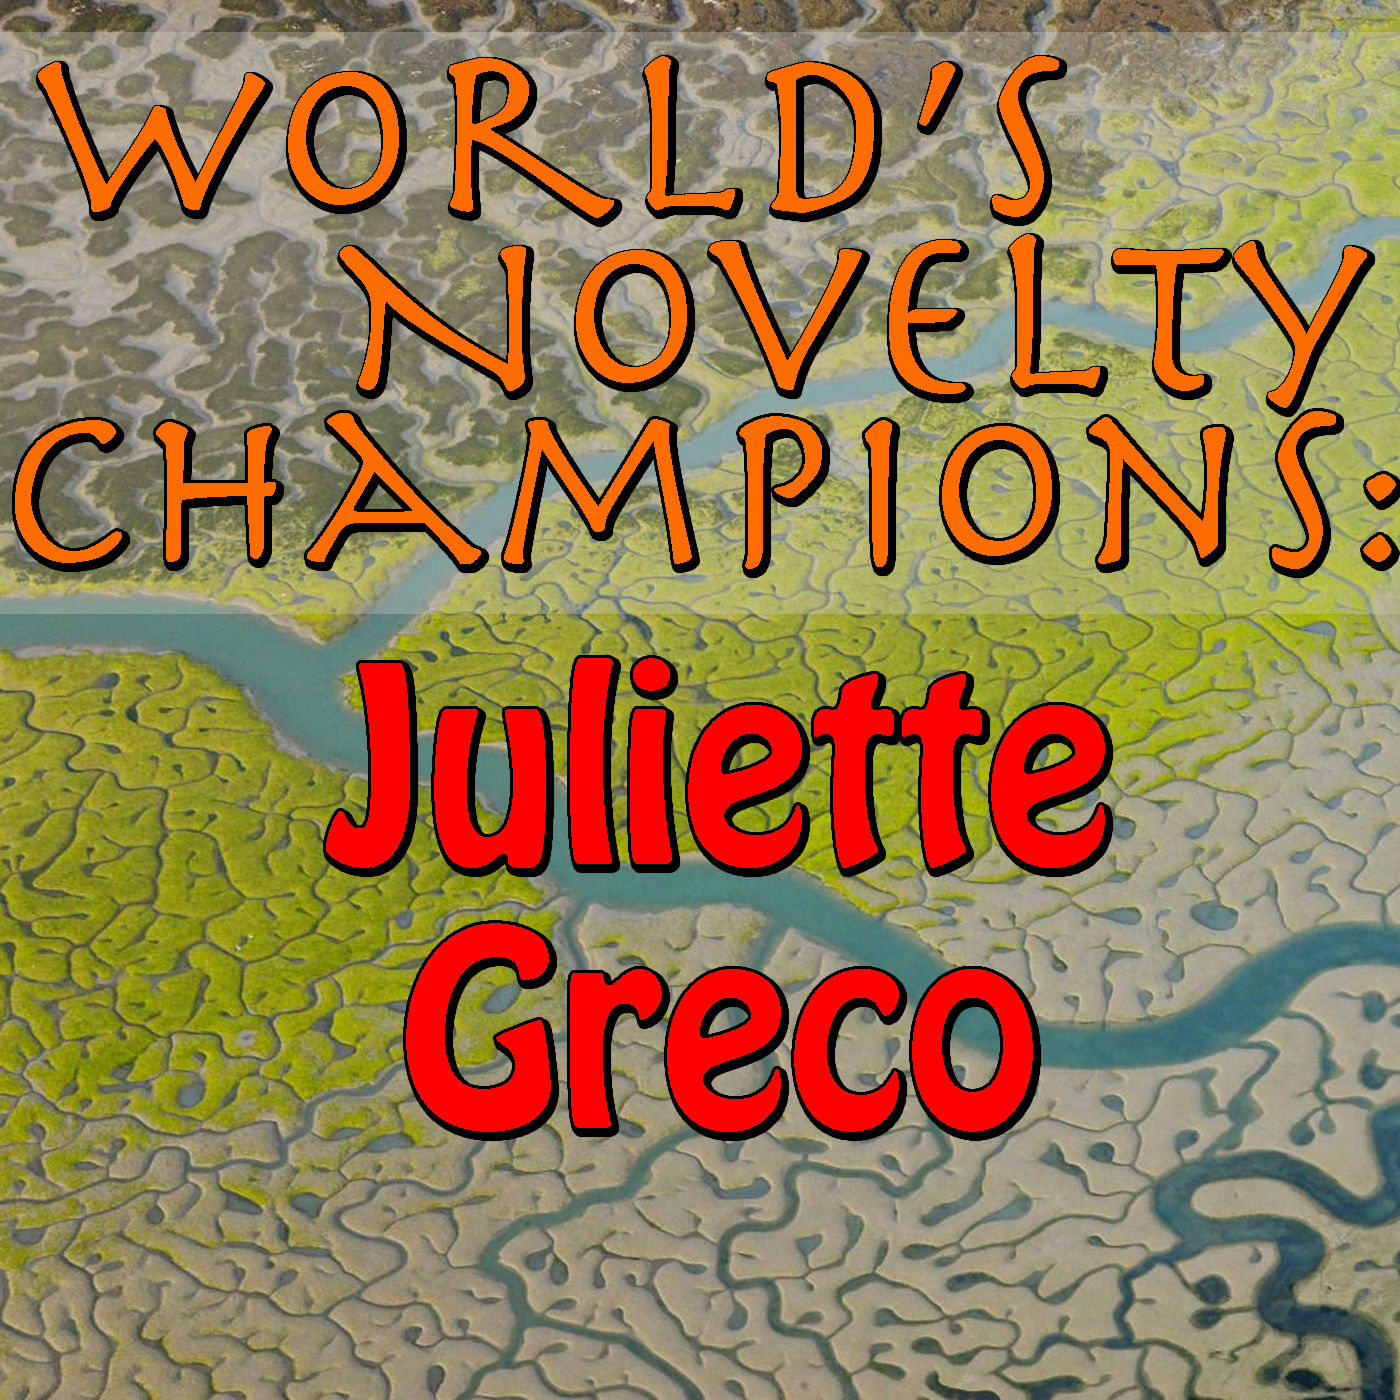 World's Novelty Champions: Juliette Greco